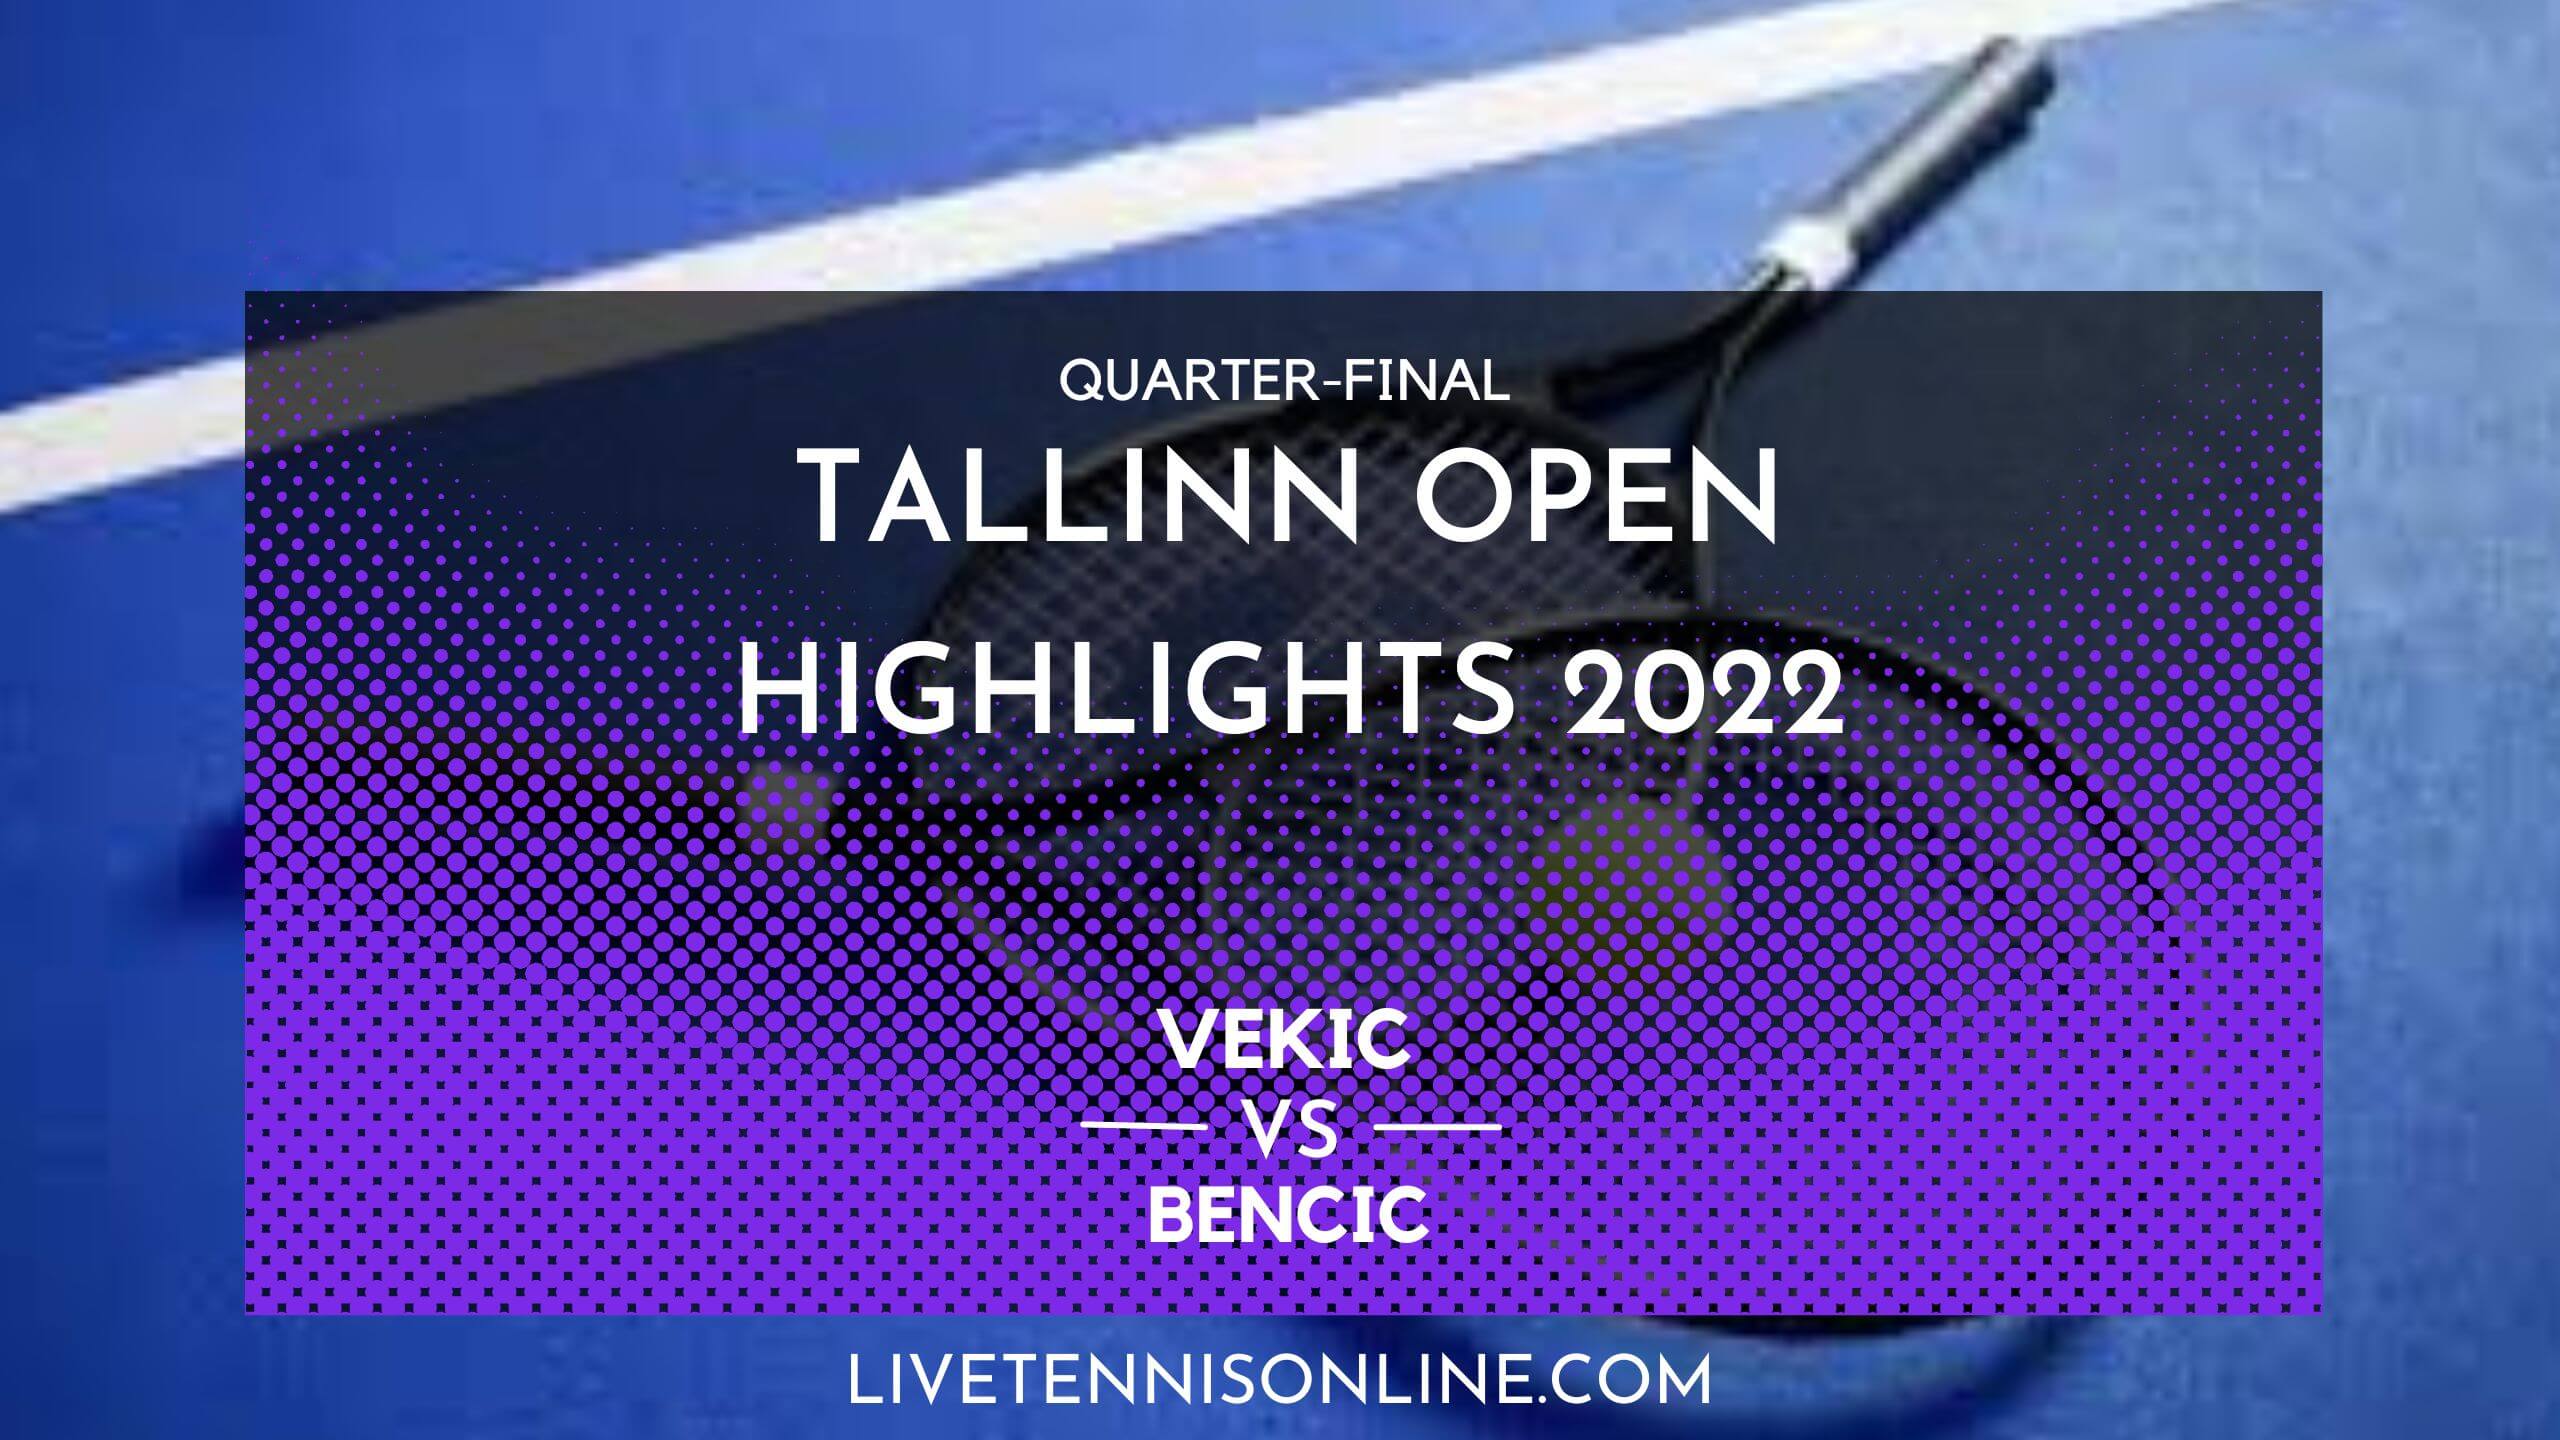 Vekic Vs Bencic QF Highlights 2022 Tallinn Open